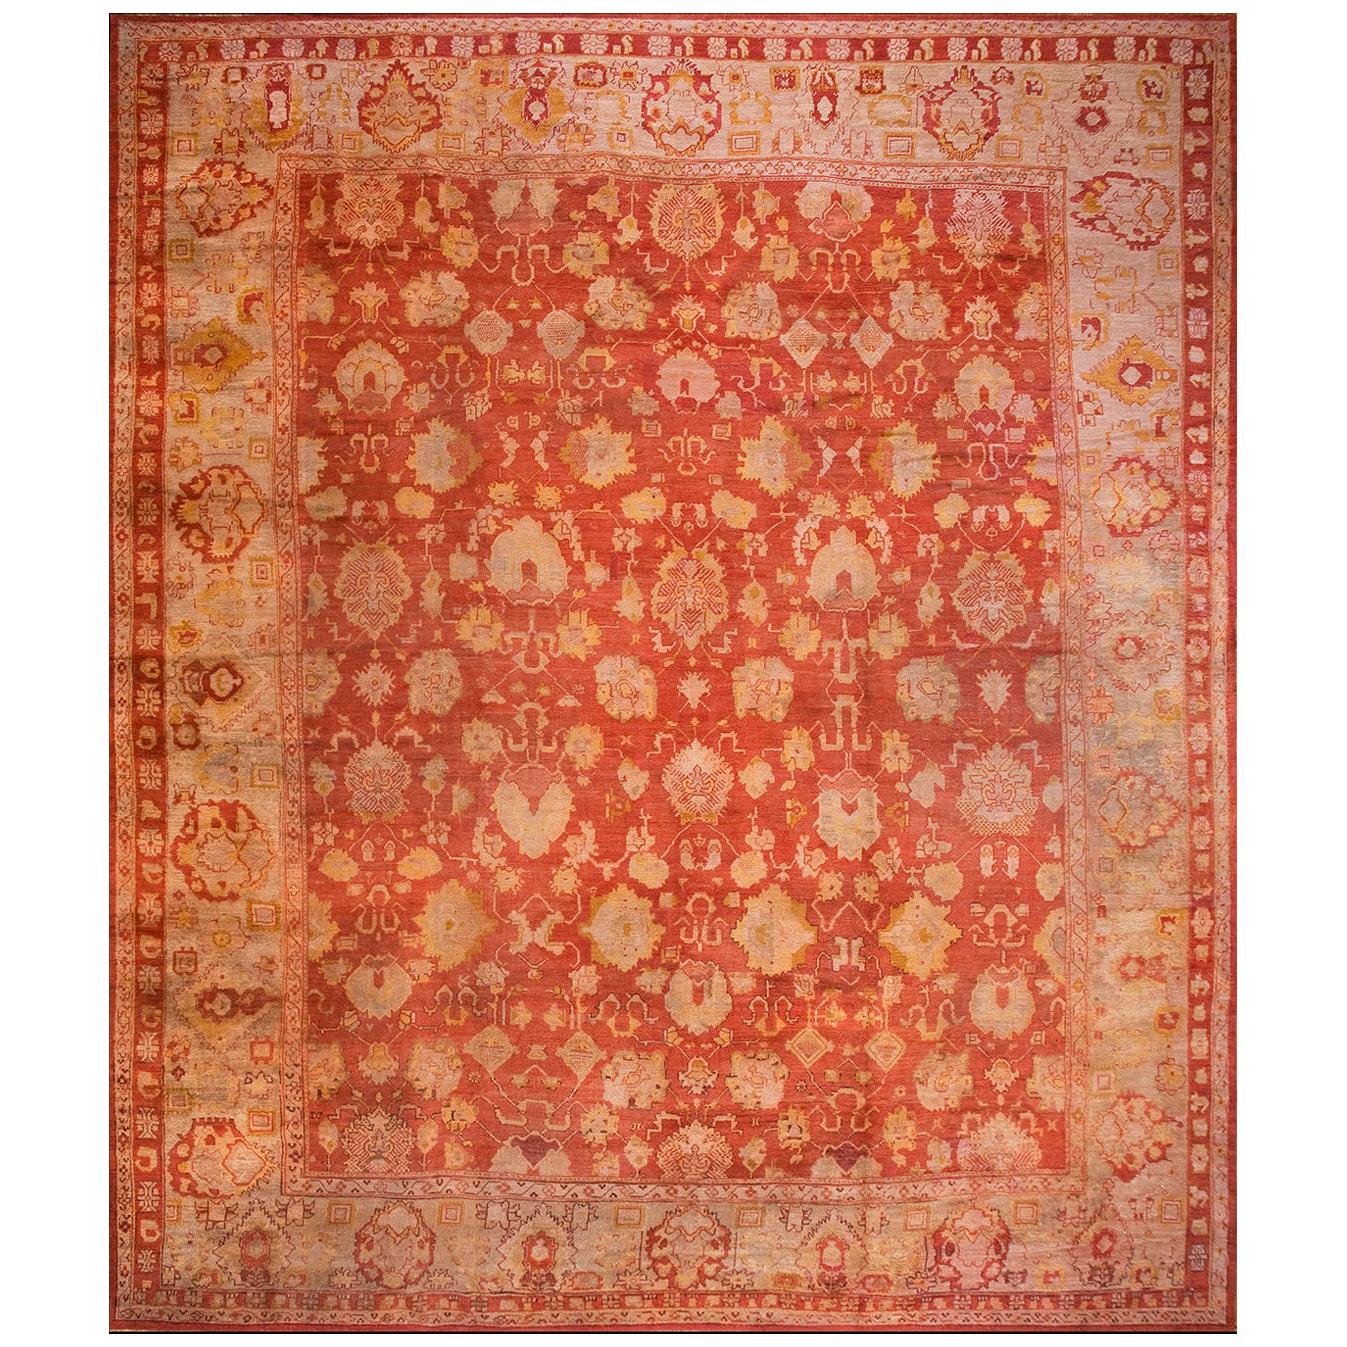 19th Century Turkish Oushak Carpet ( 14'10" x 17'6" - 452 x 533 )